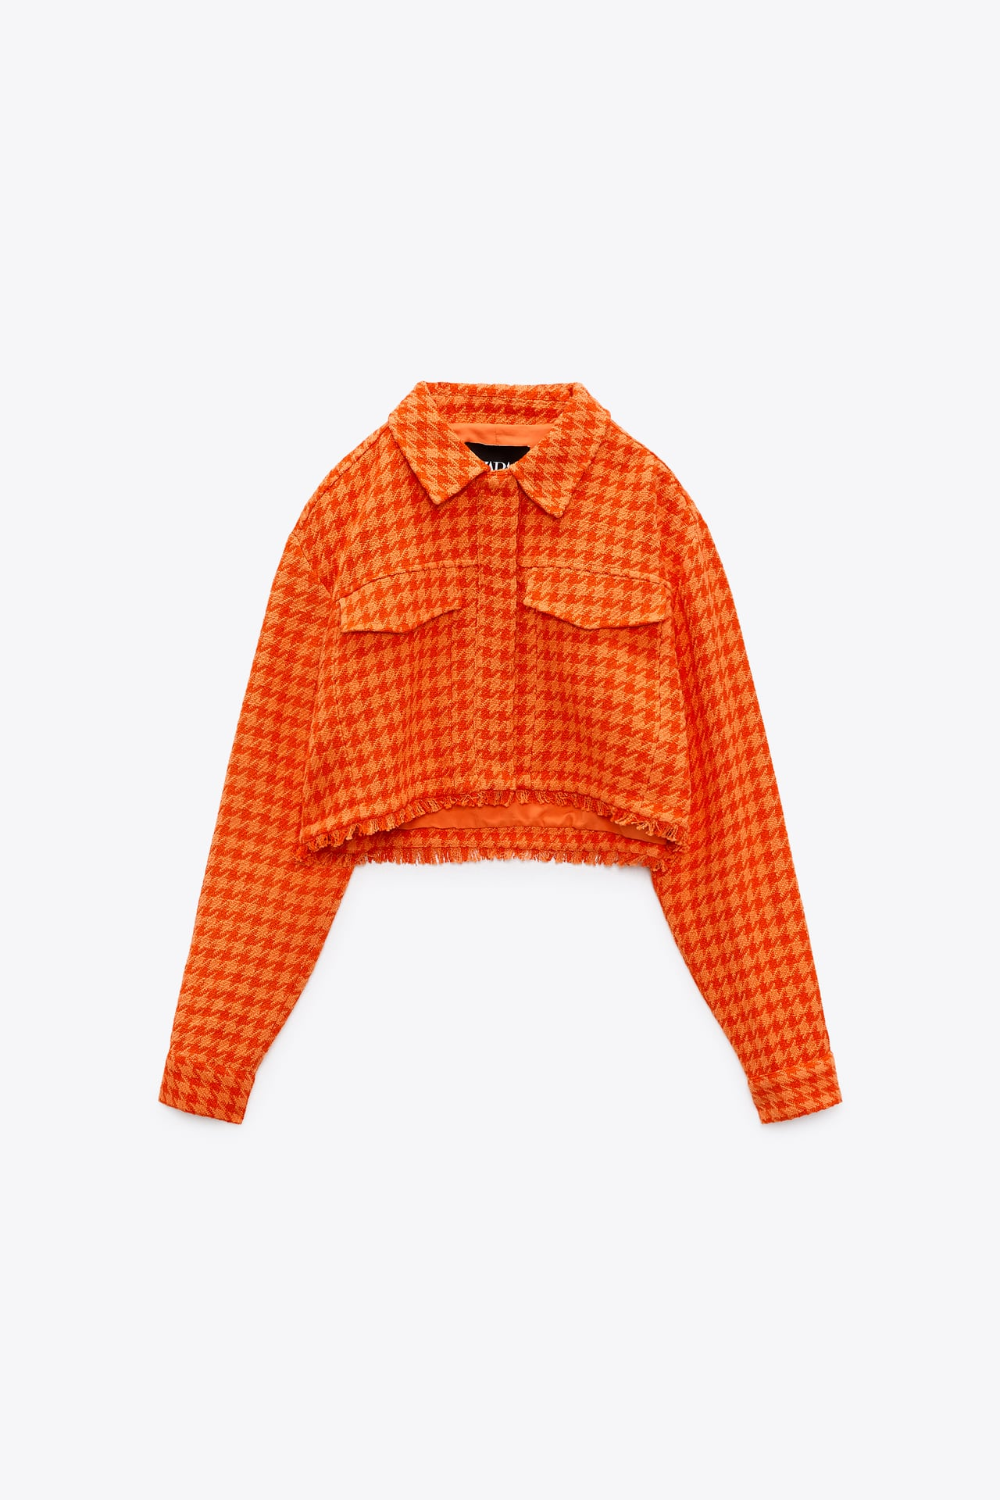 https://flyfiercefab.com/wp-content/uploads/2022/03/Zara-orange-houndtooth-tweed-cropped-jacket.png